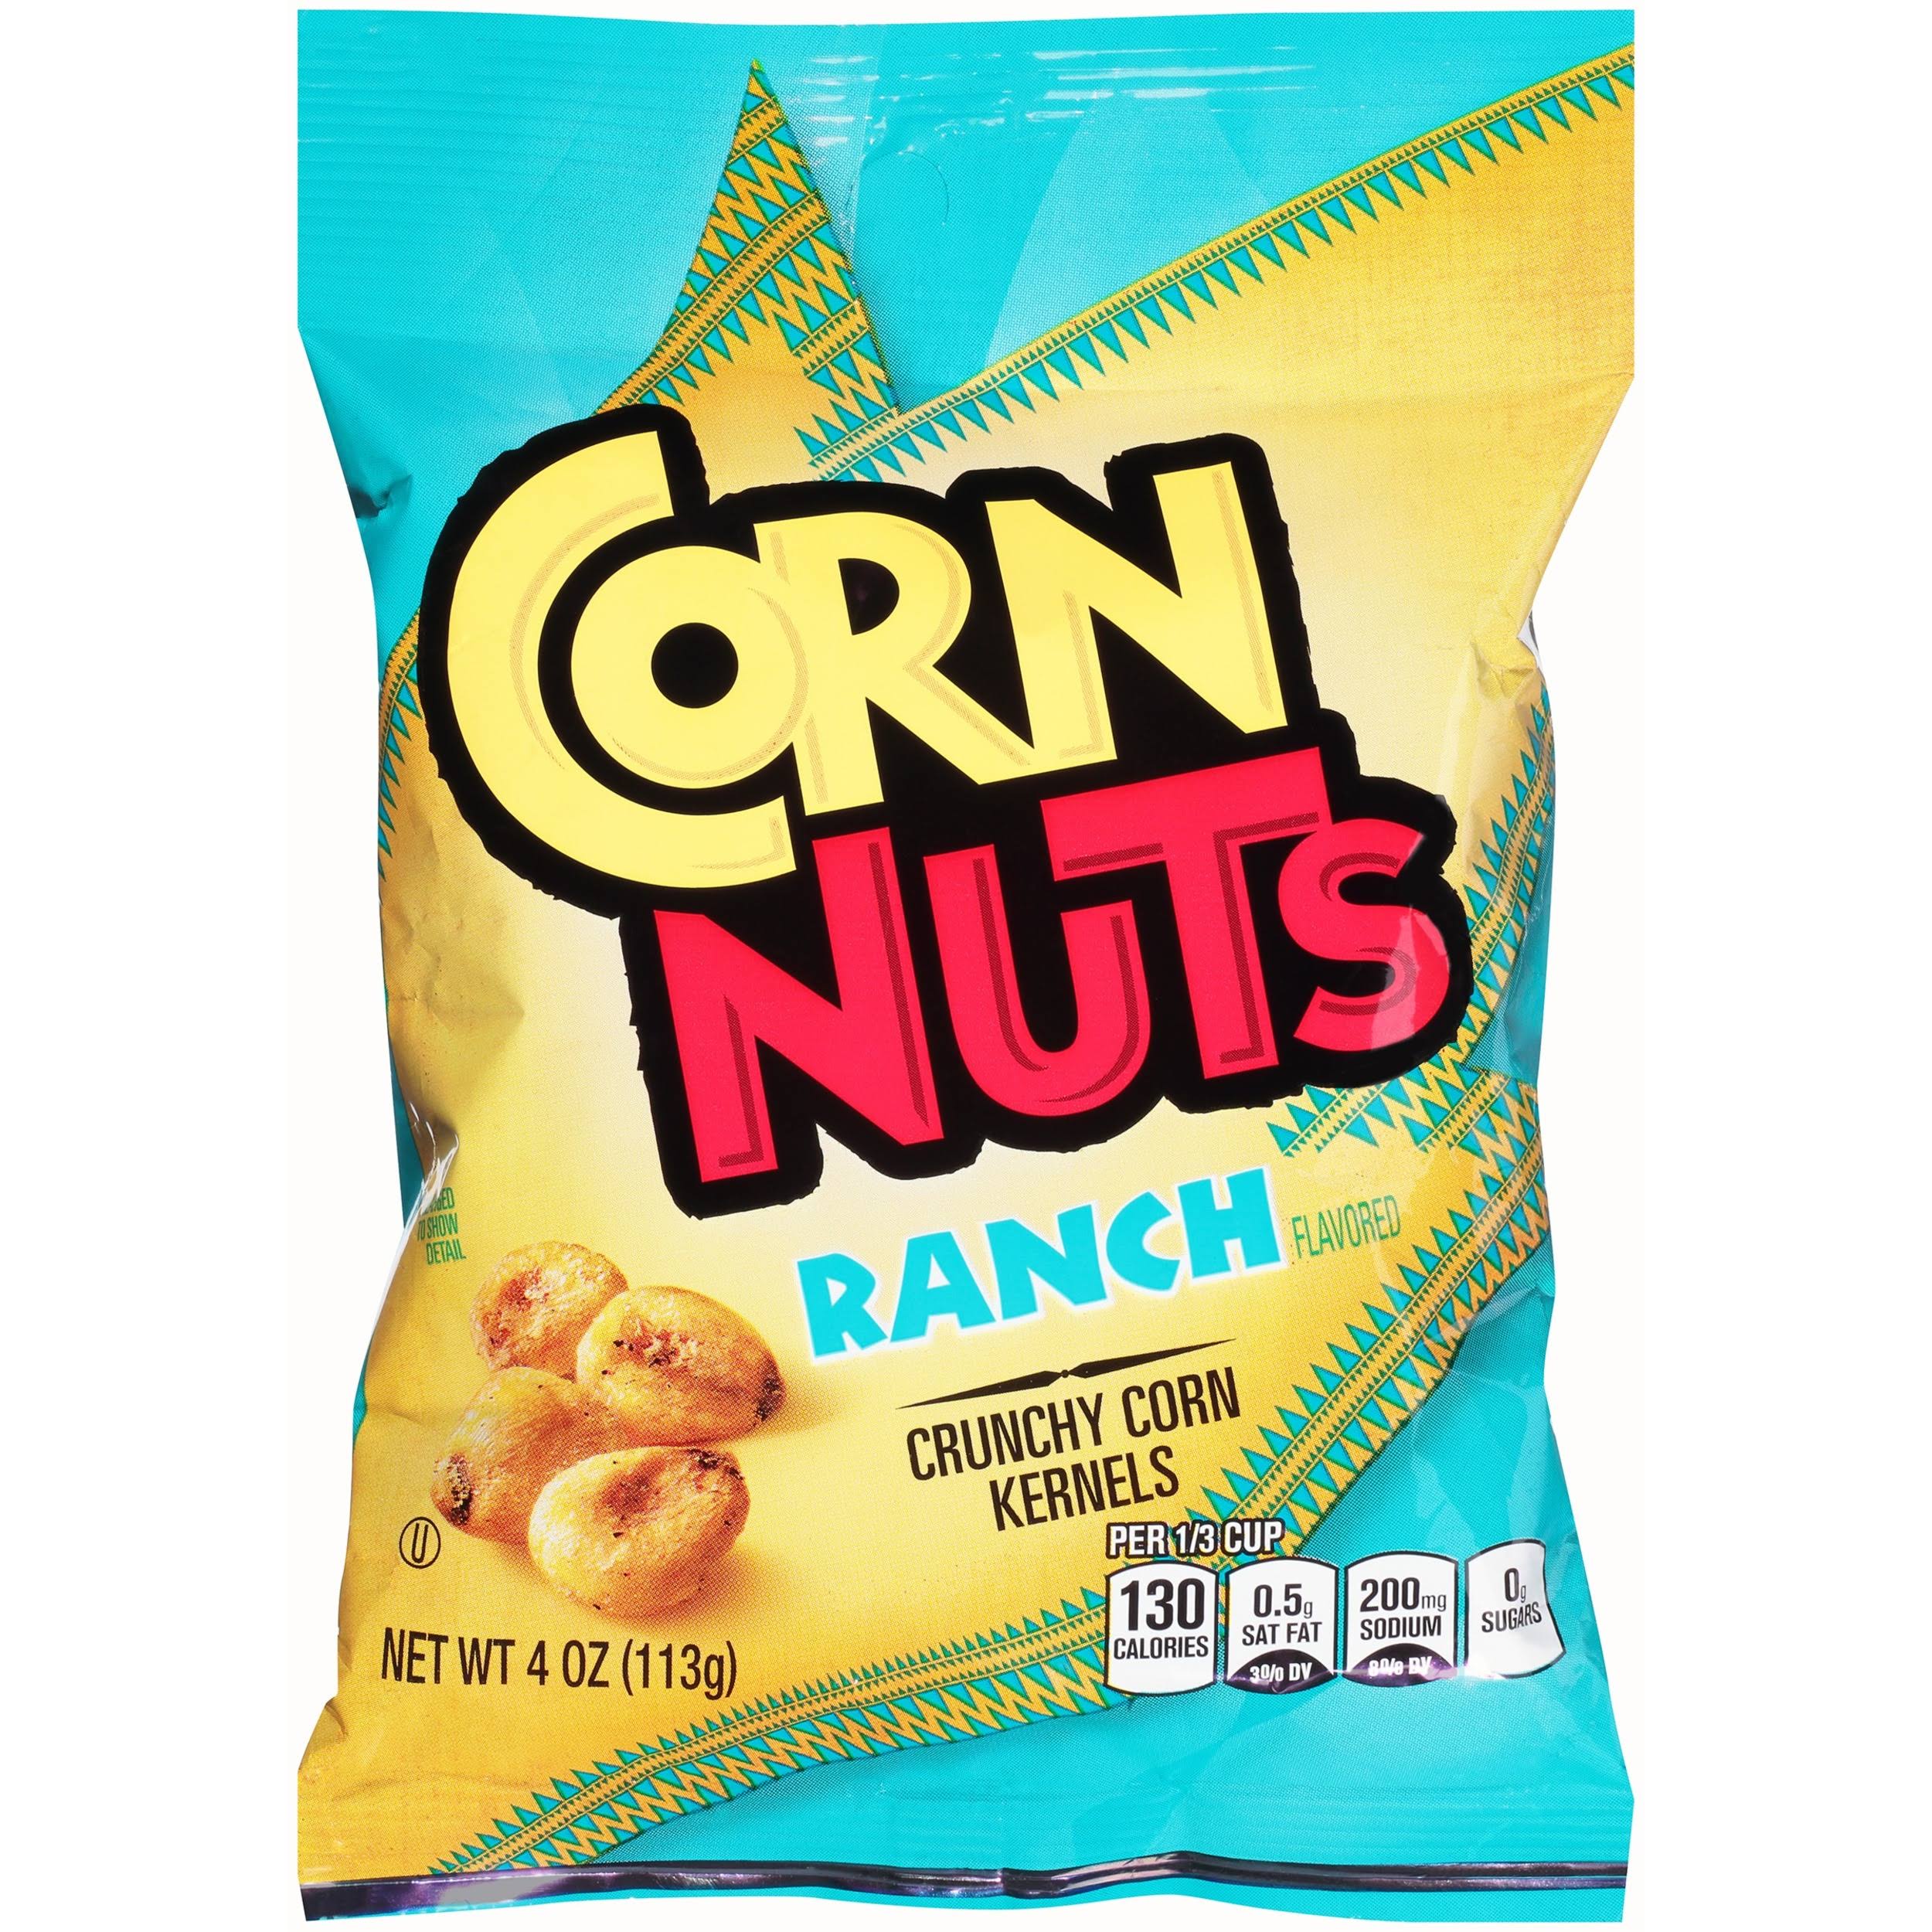 Kraft Corn Nuts Snack - Ranch Flavored, 4oz